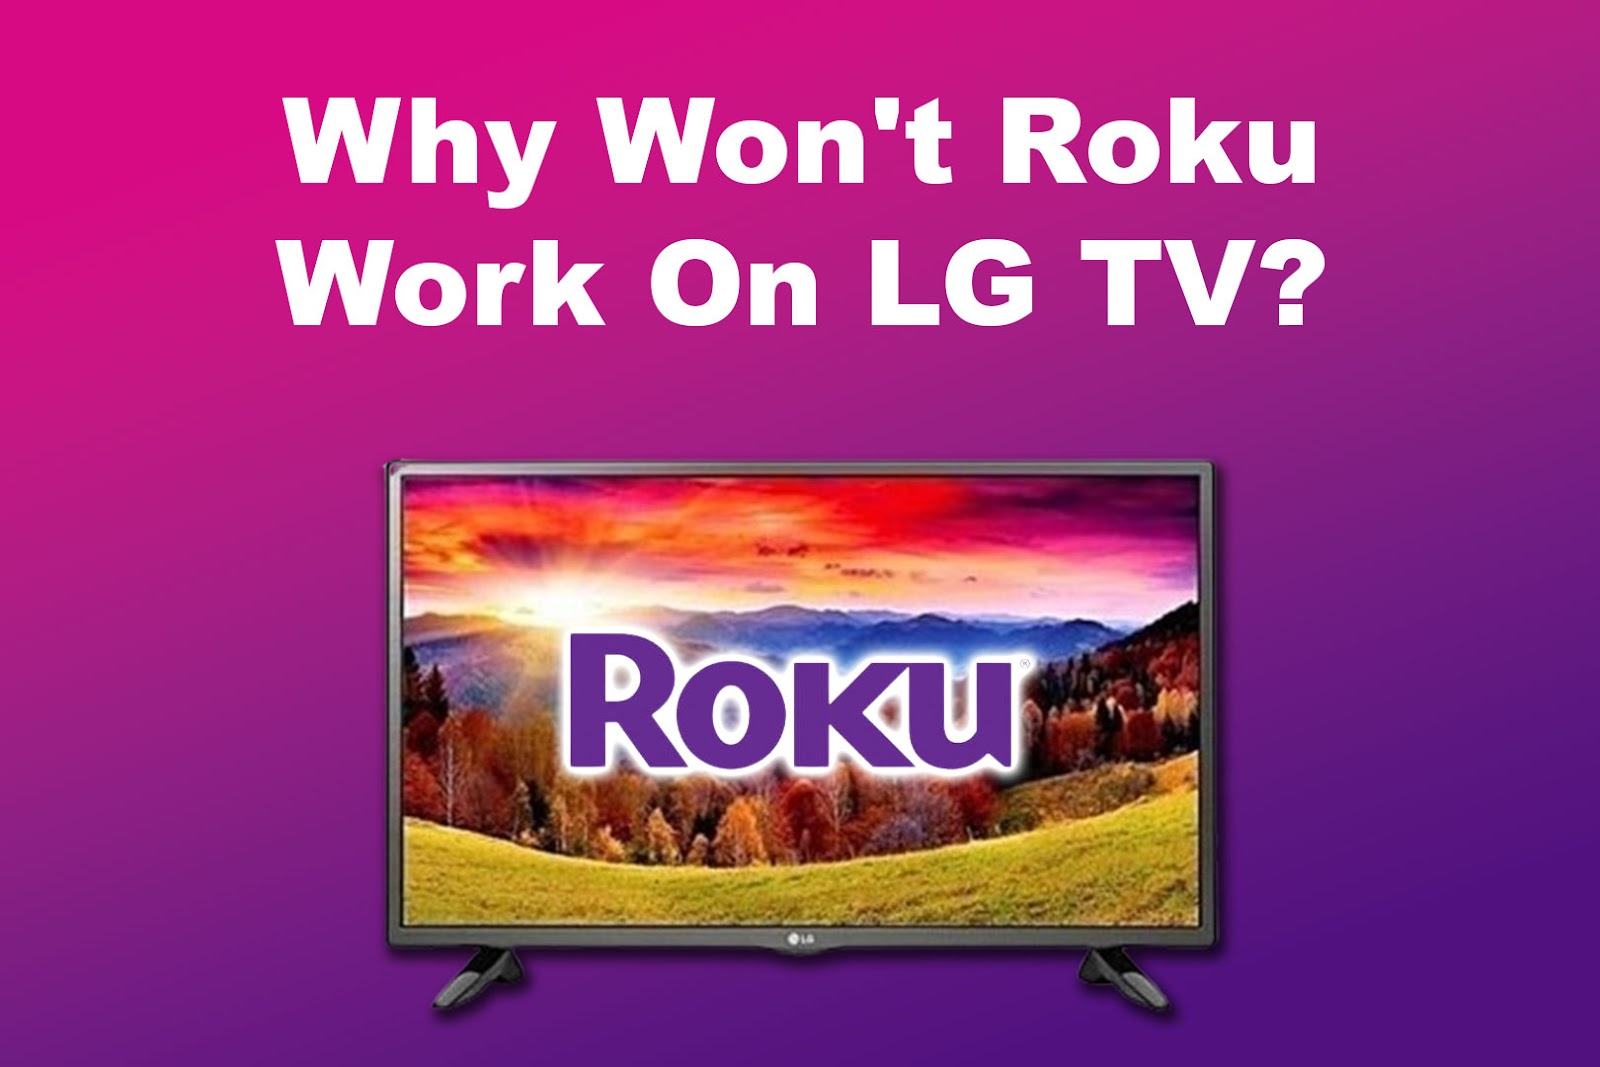 Why Won't Roku Work On LG TV